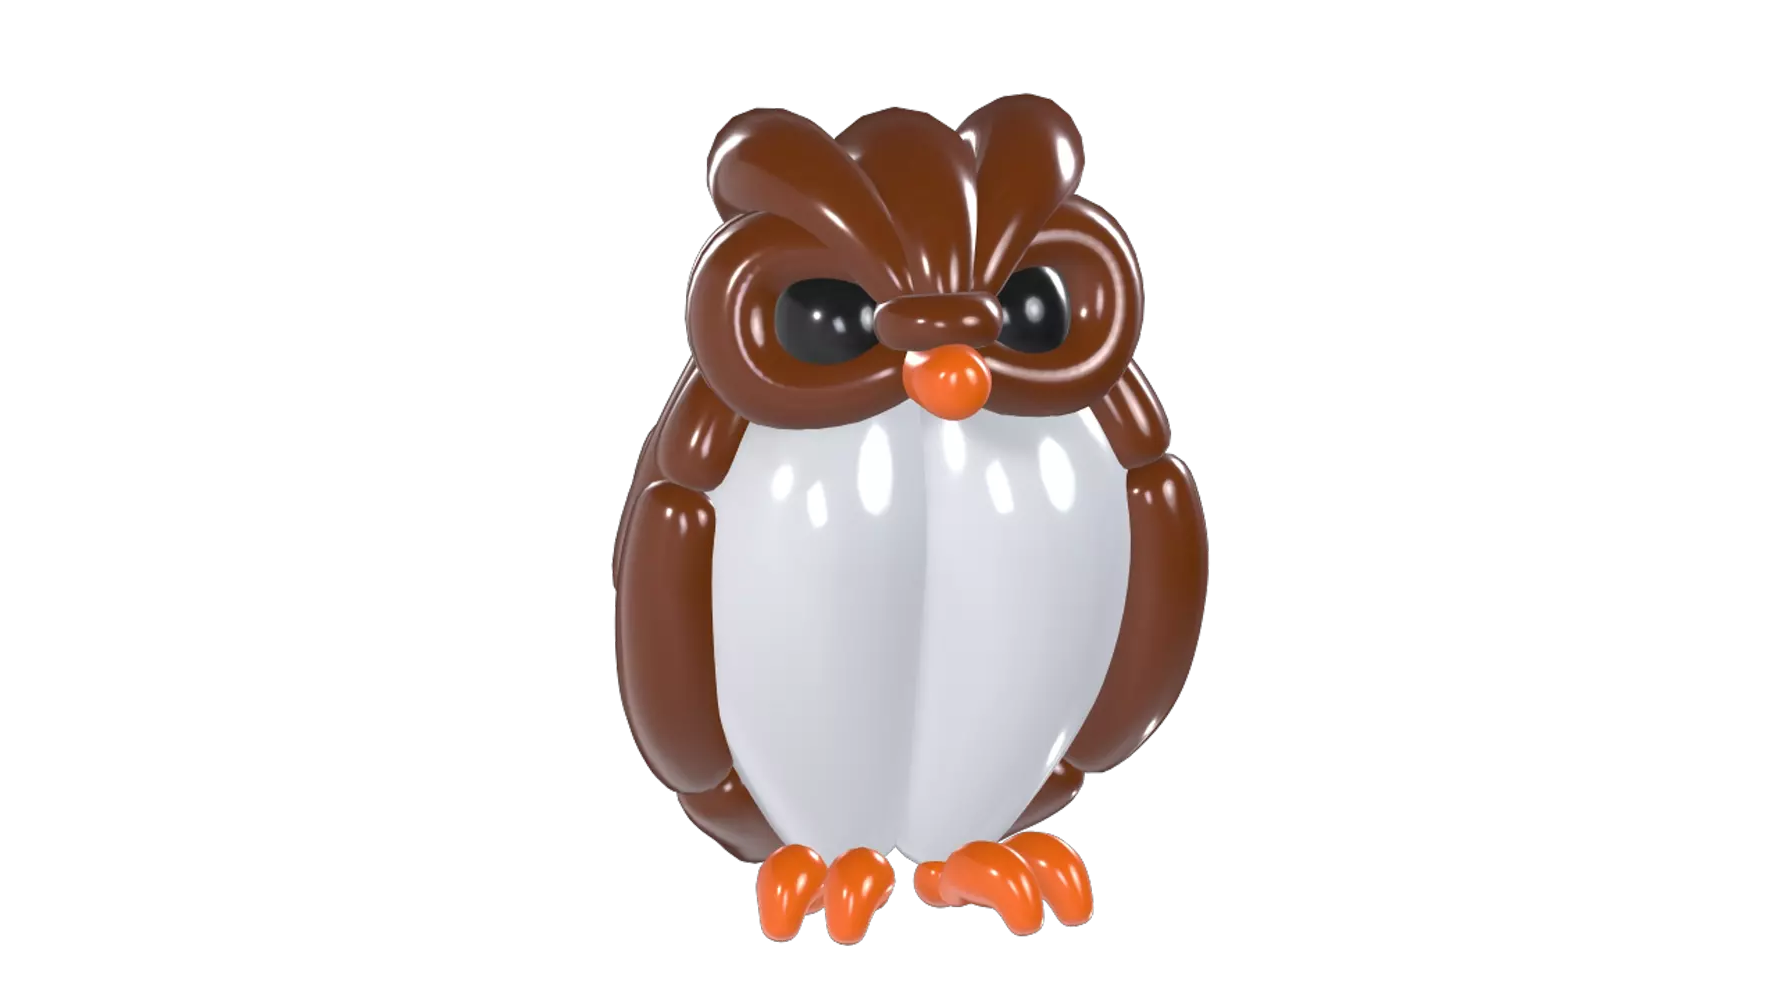 Owl Balloon 3D Graphic